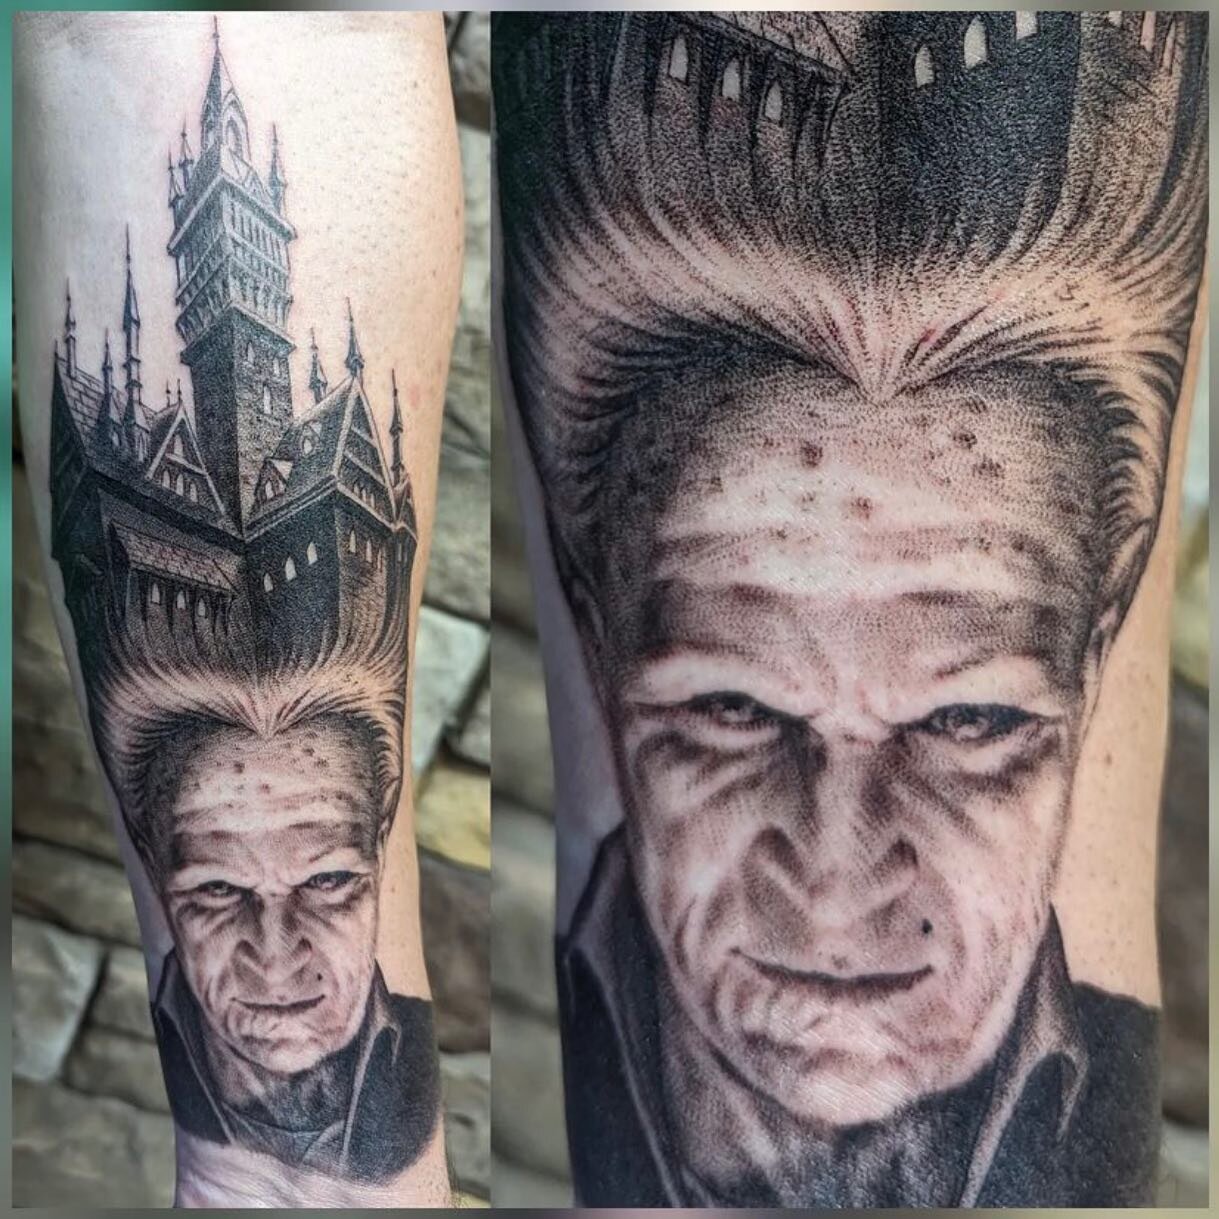 Dracula and castle by: Nelson 
@nelson.tattoos 
-
-
-
-
-
#tattoo #horrortattoo #blackandgreytattoo #castle #realistictattoo #horrortattoo #besttattoo #qualitytattoo
#ottawatattoo